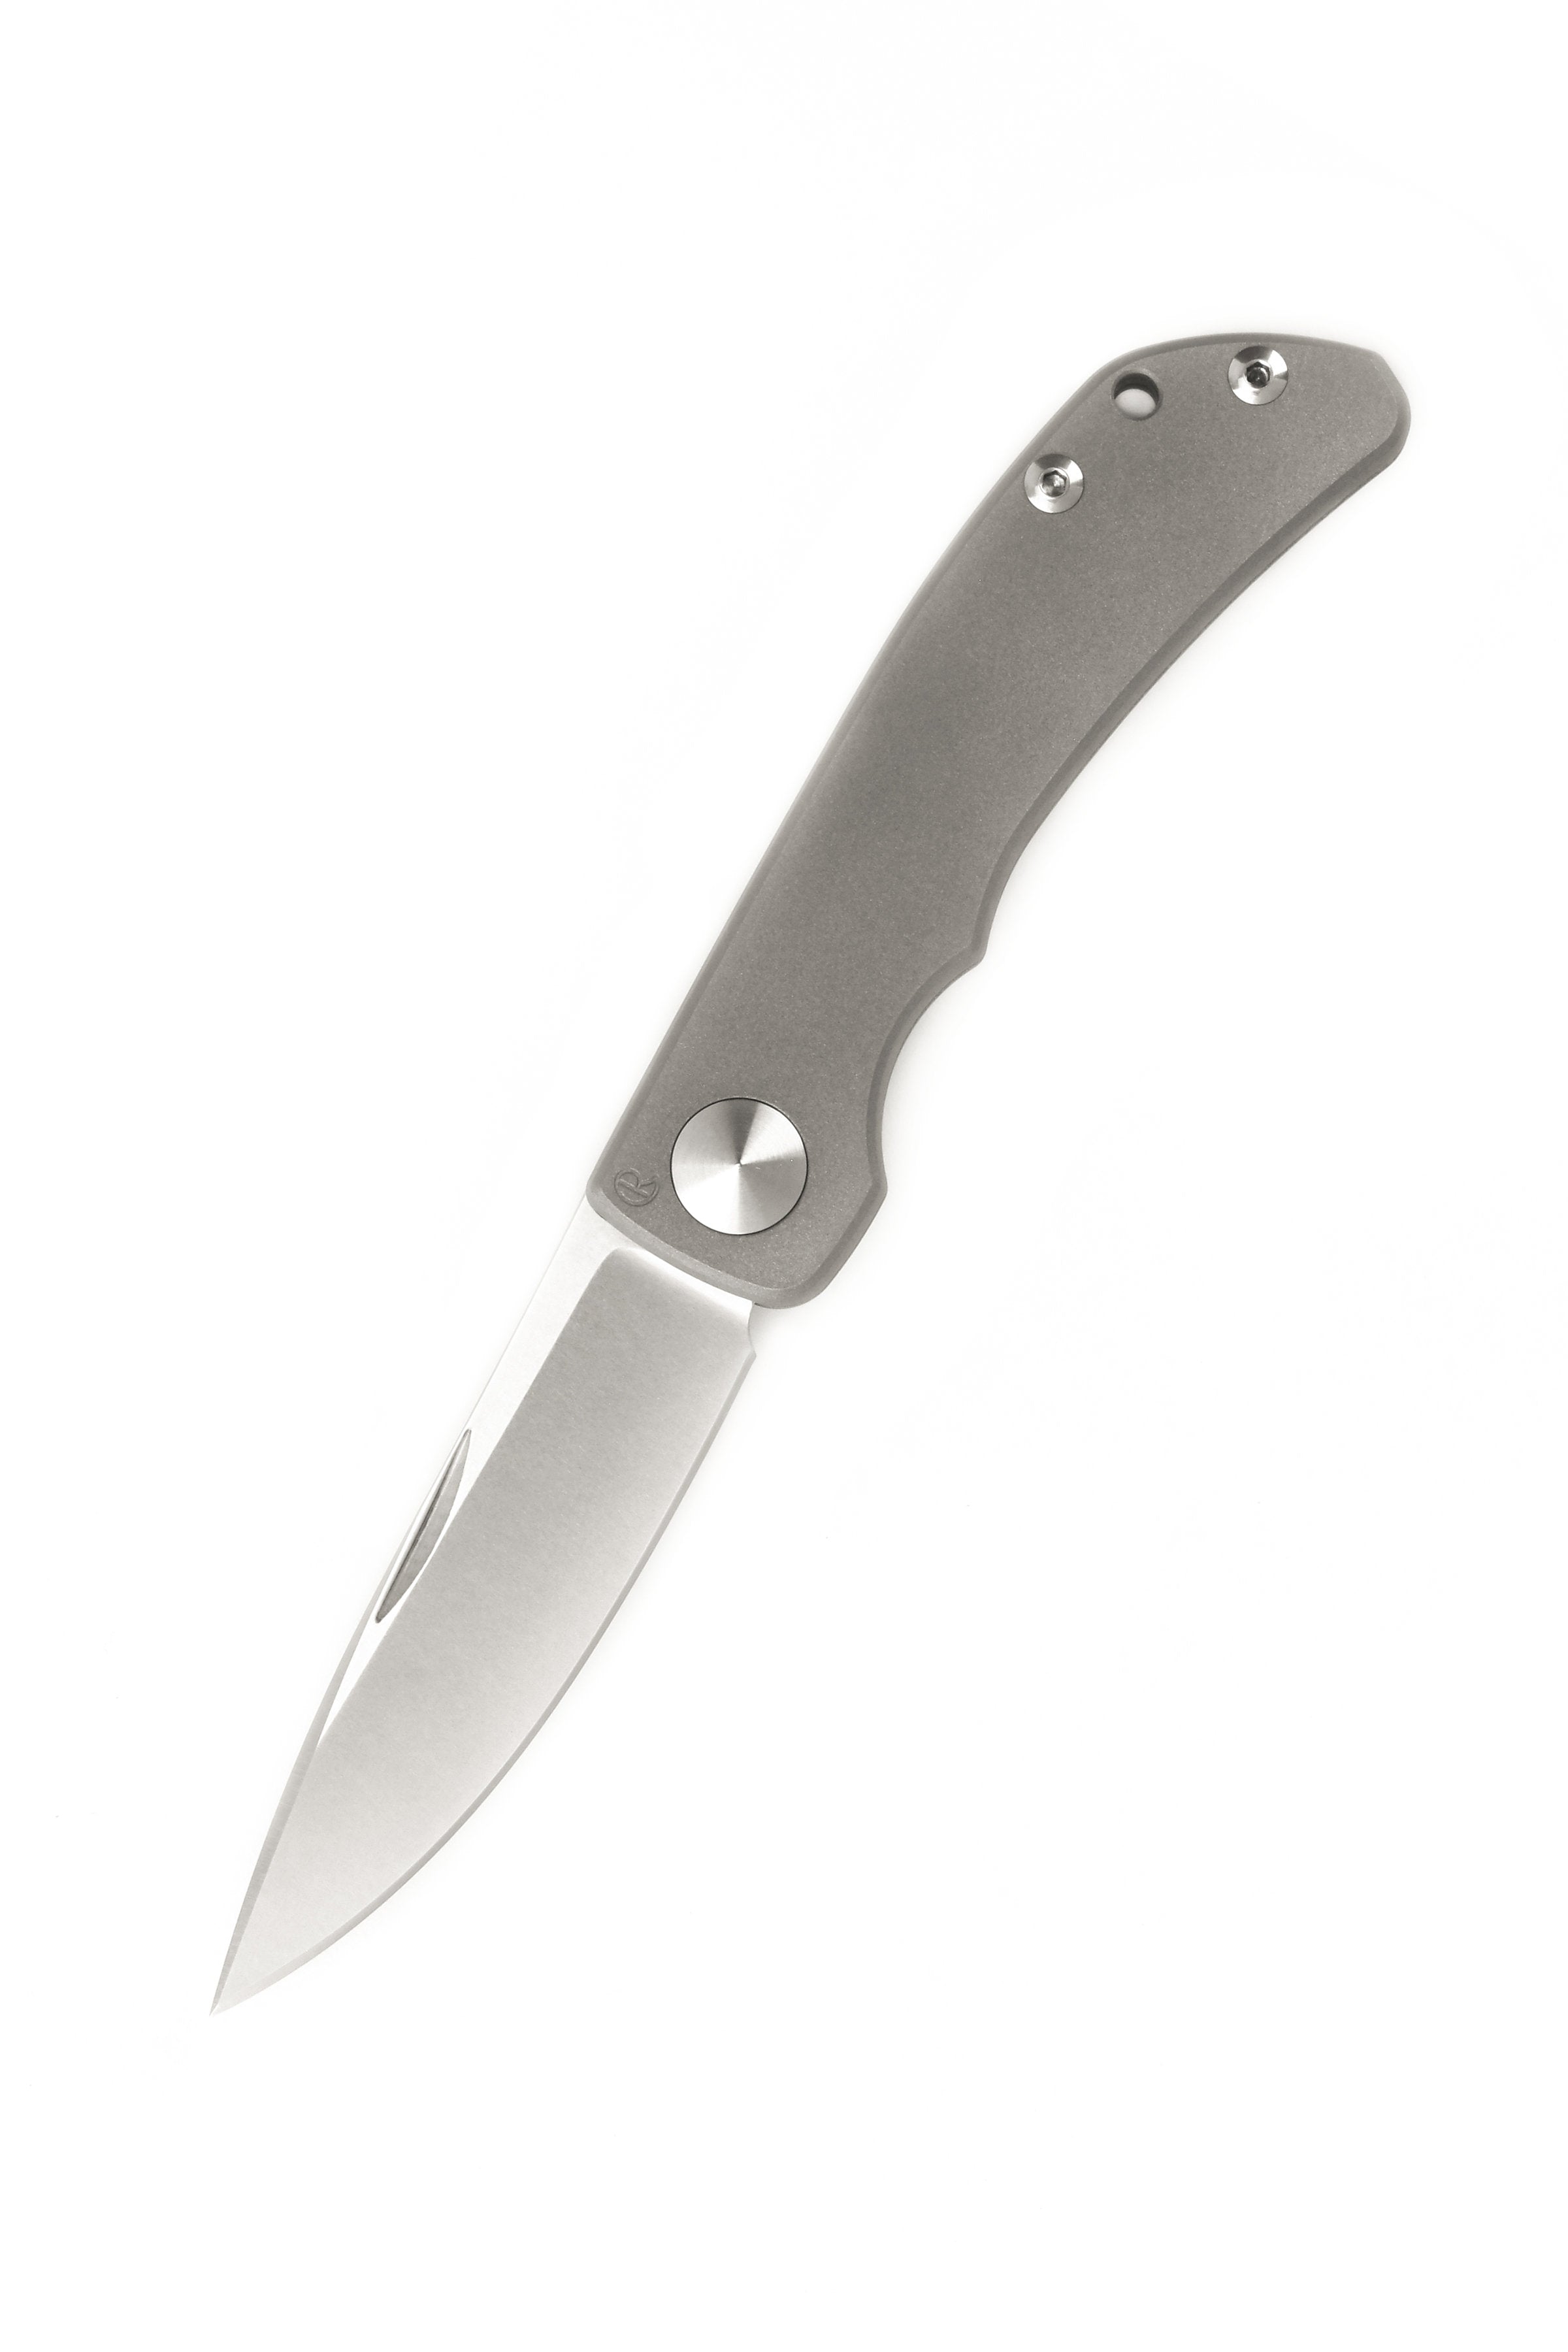 Chris Reeve Knives Impinda - Slip Joint - Plain Edge - Drop Point - IMP-1000-1